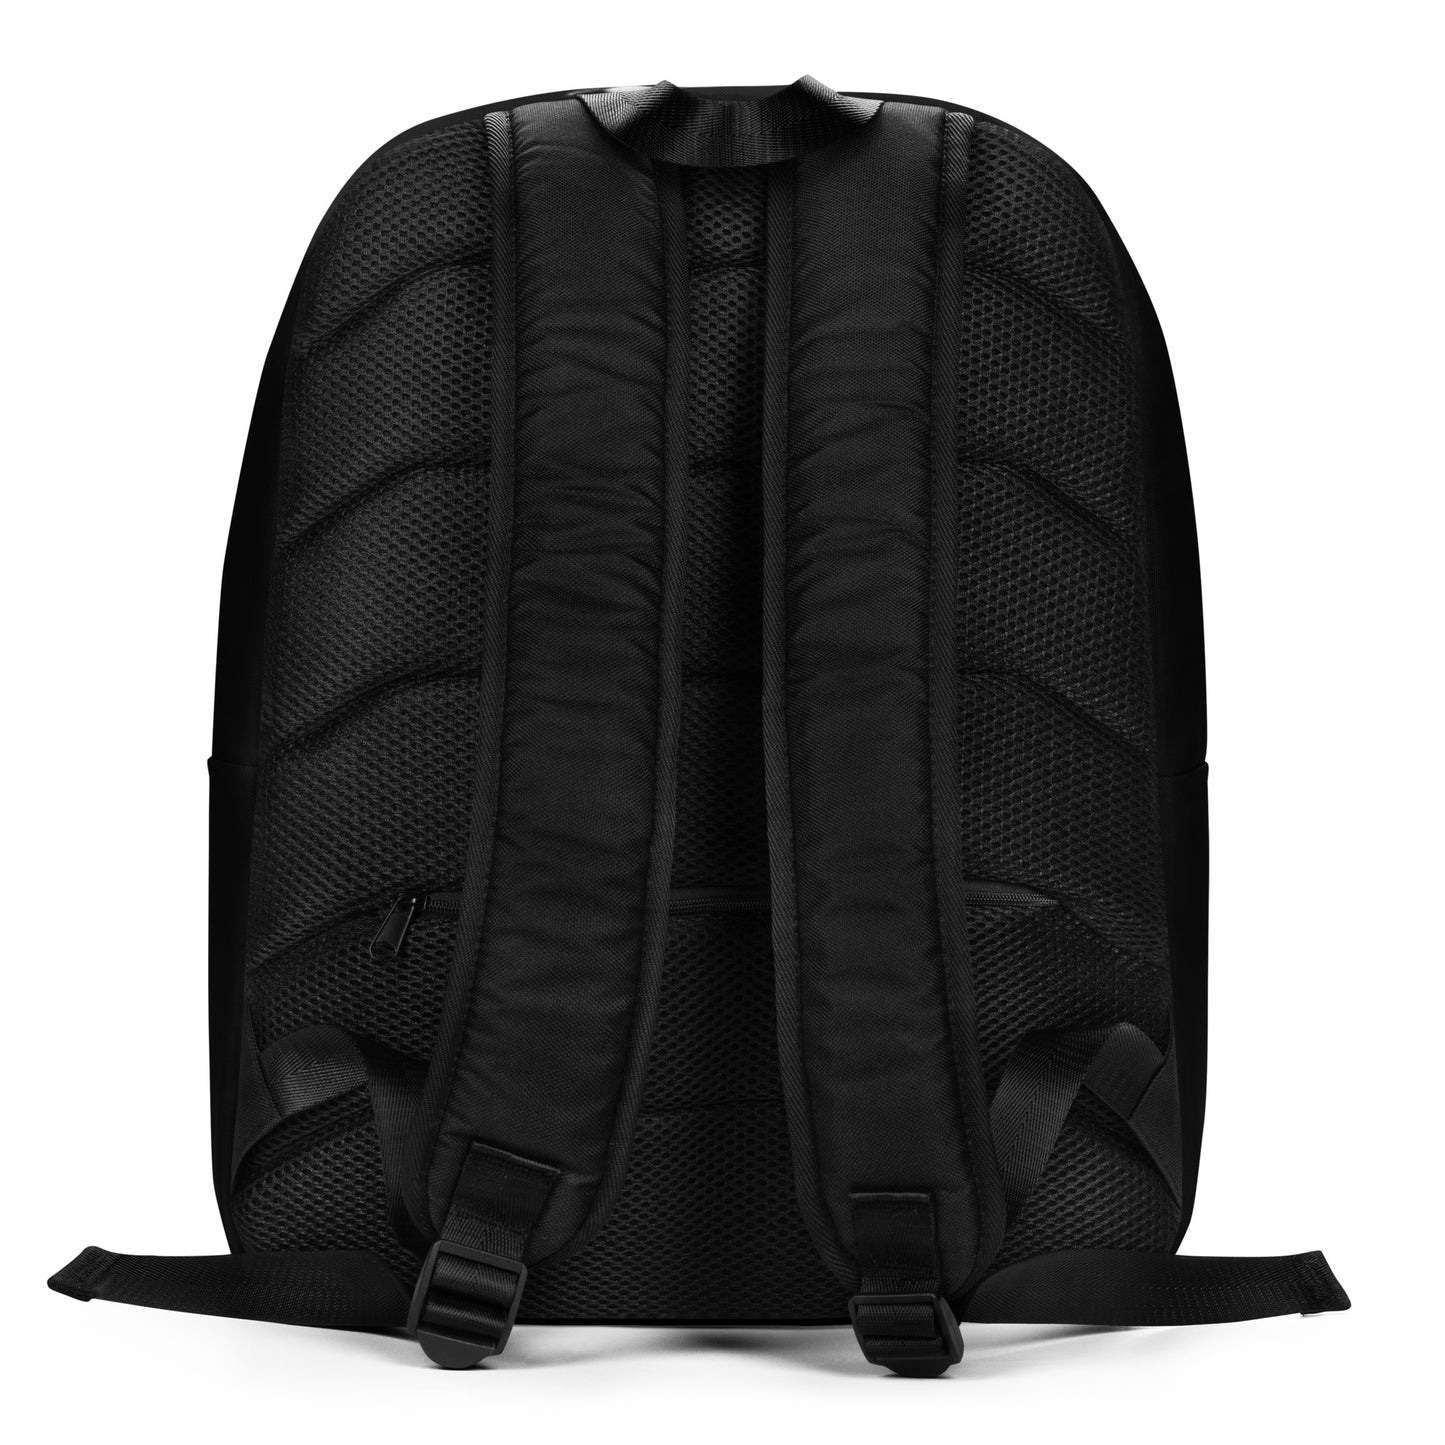 PROPHECY FEST - Backpack Black